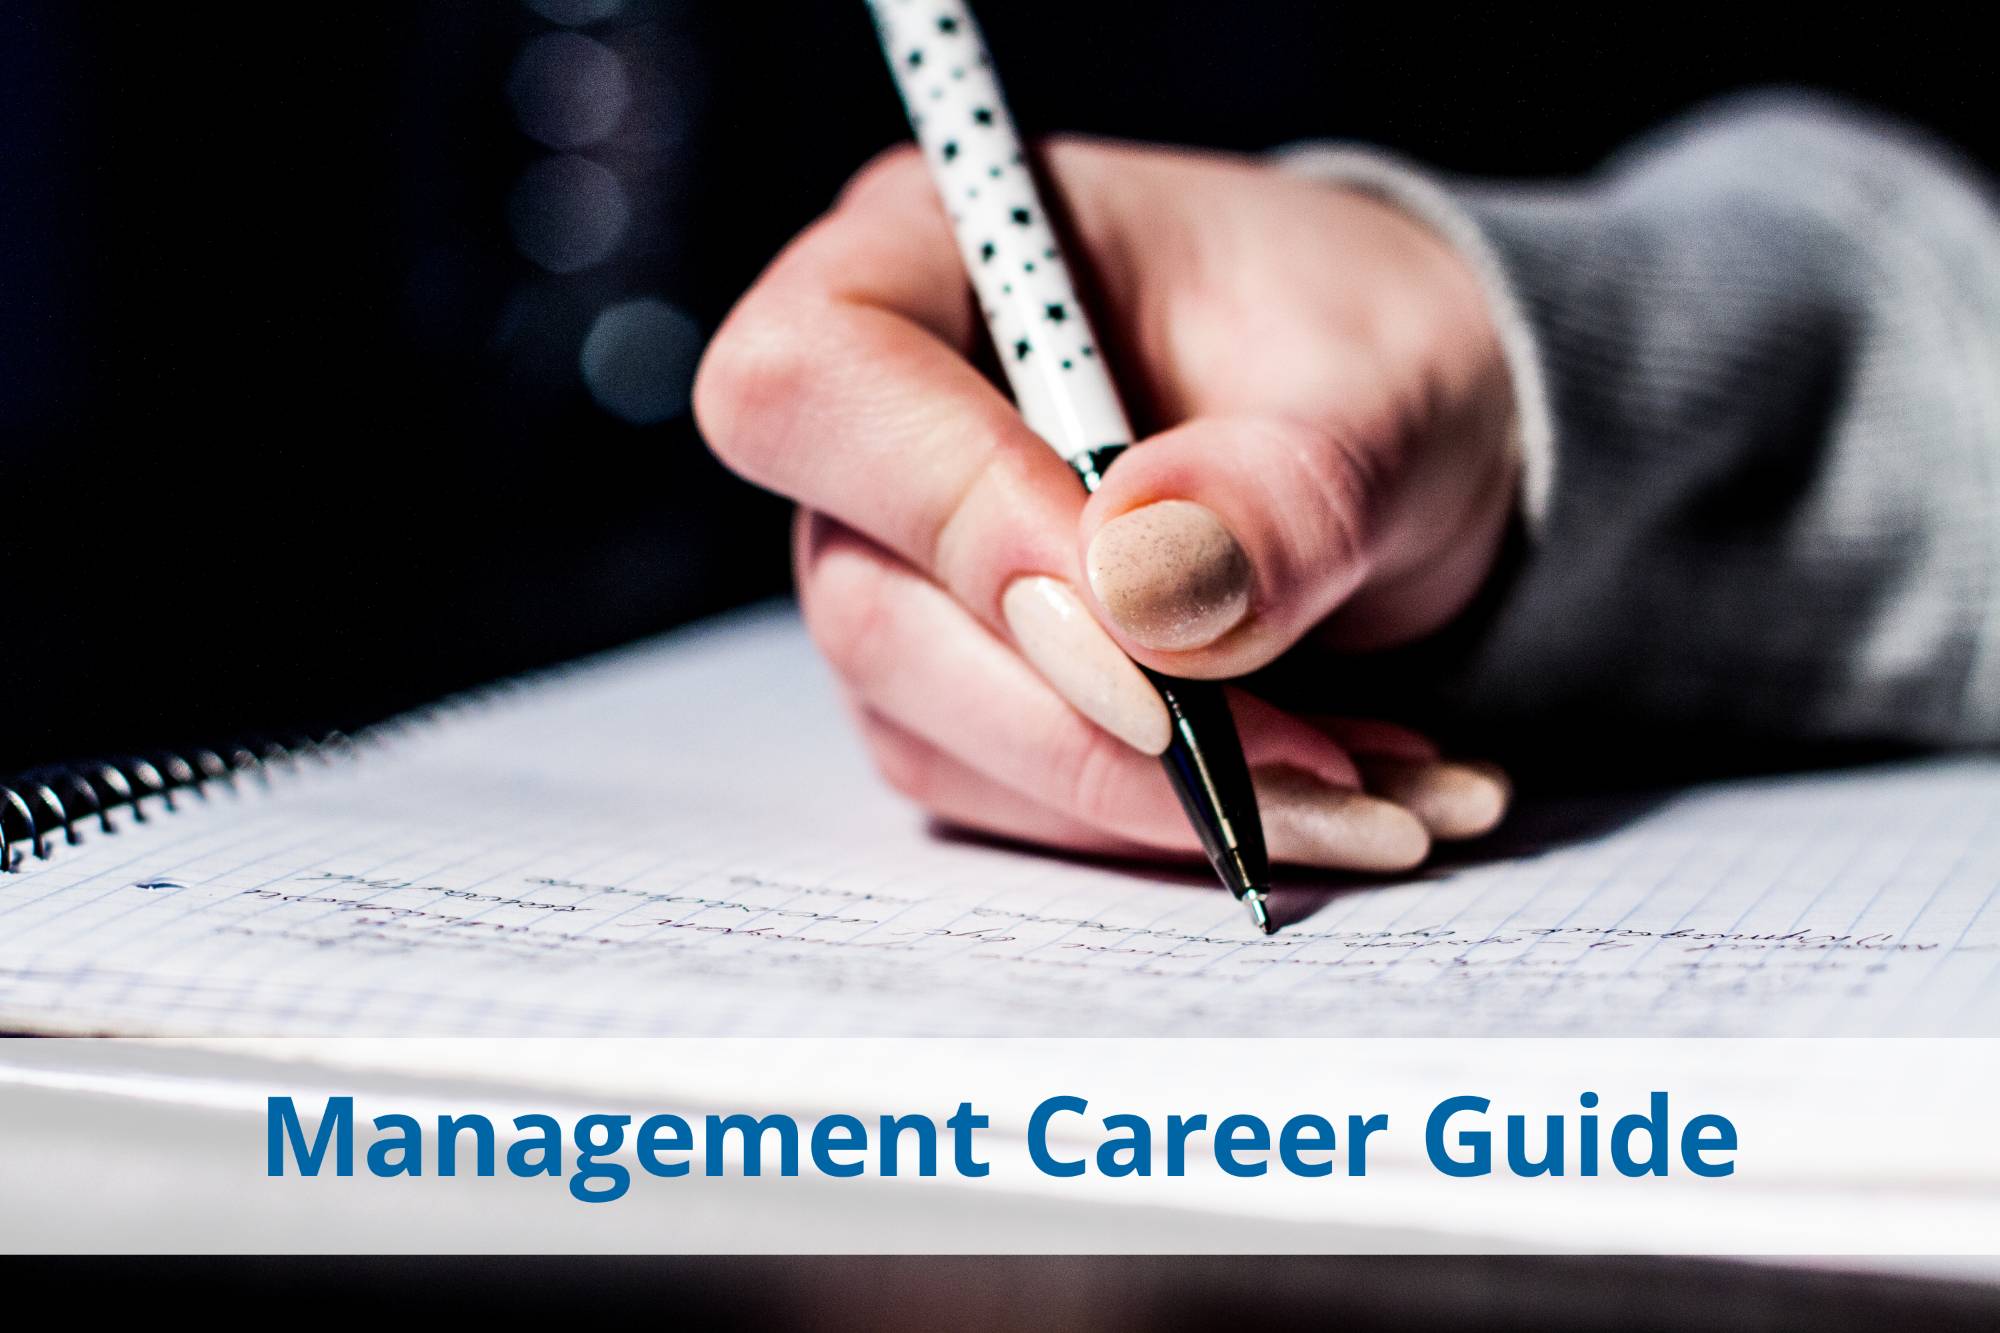 Management career guide